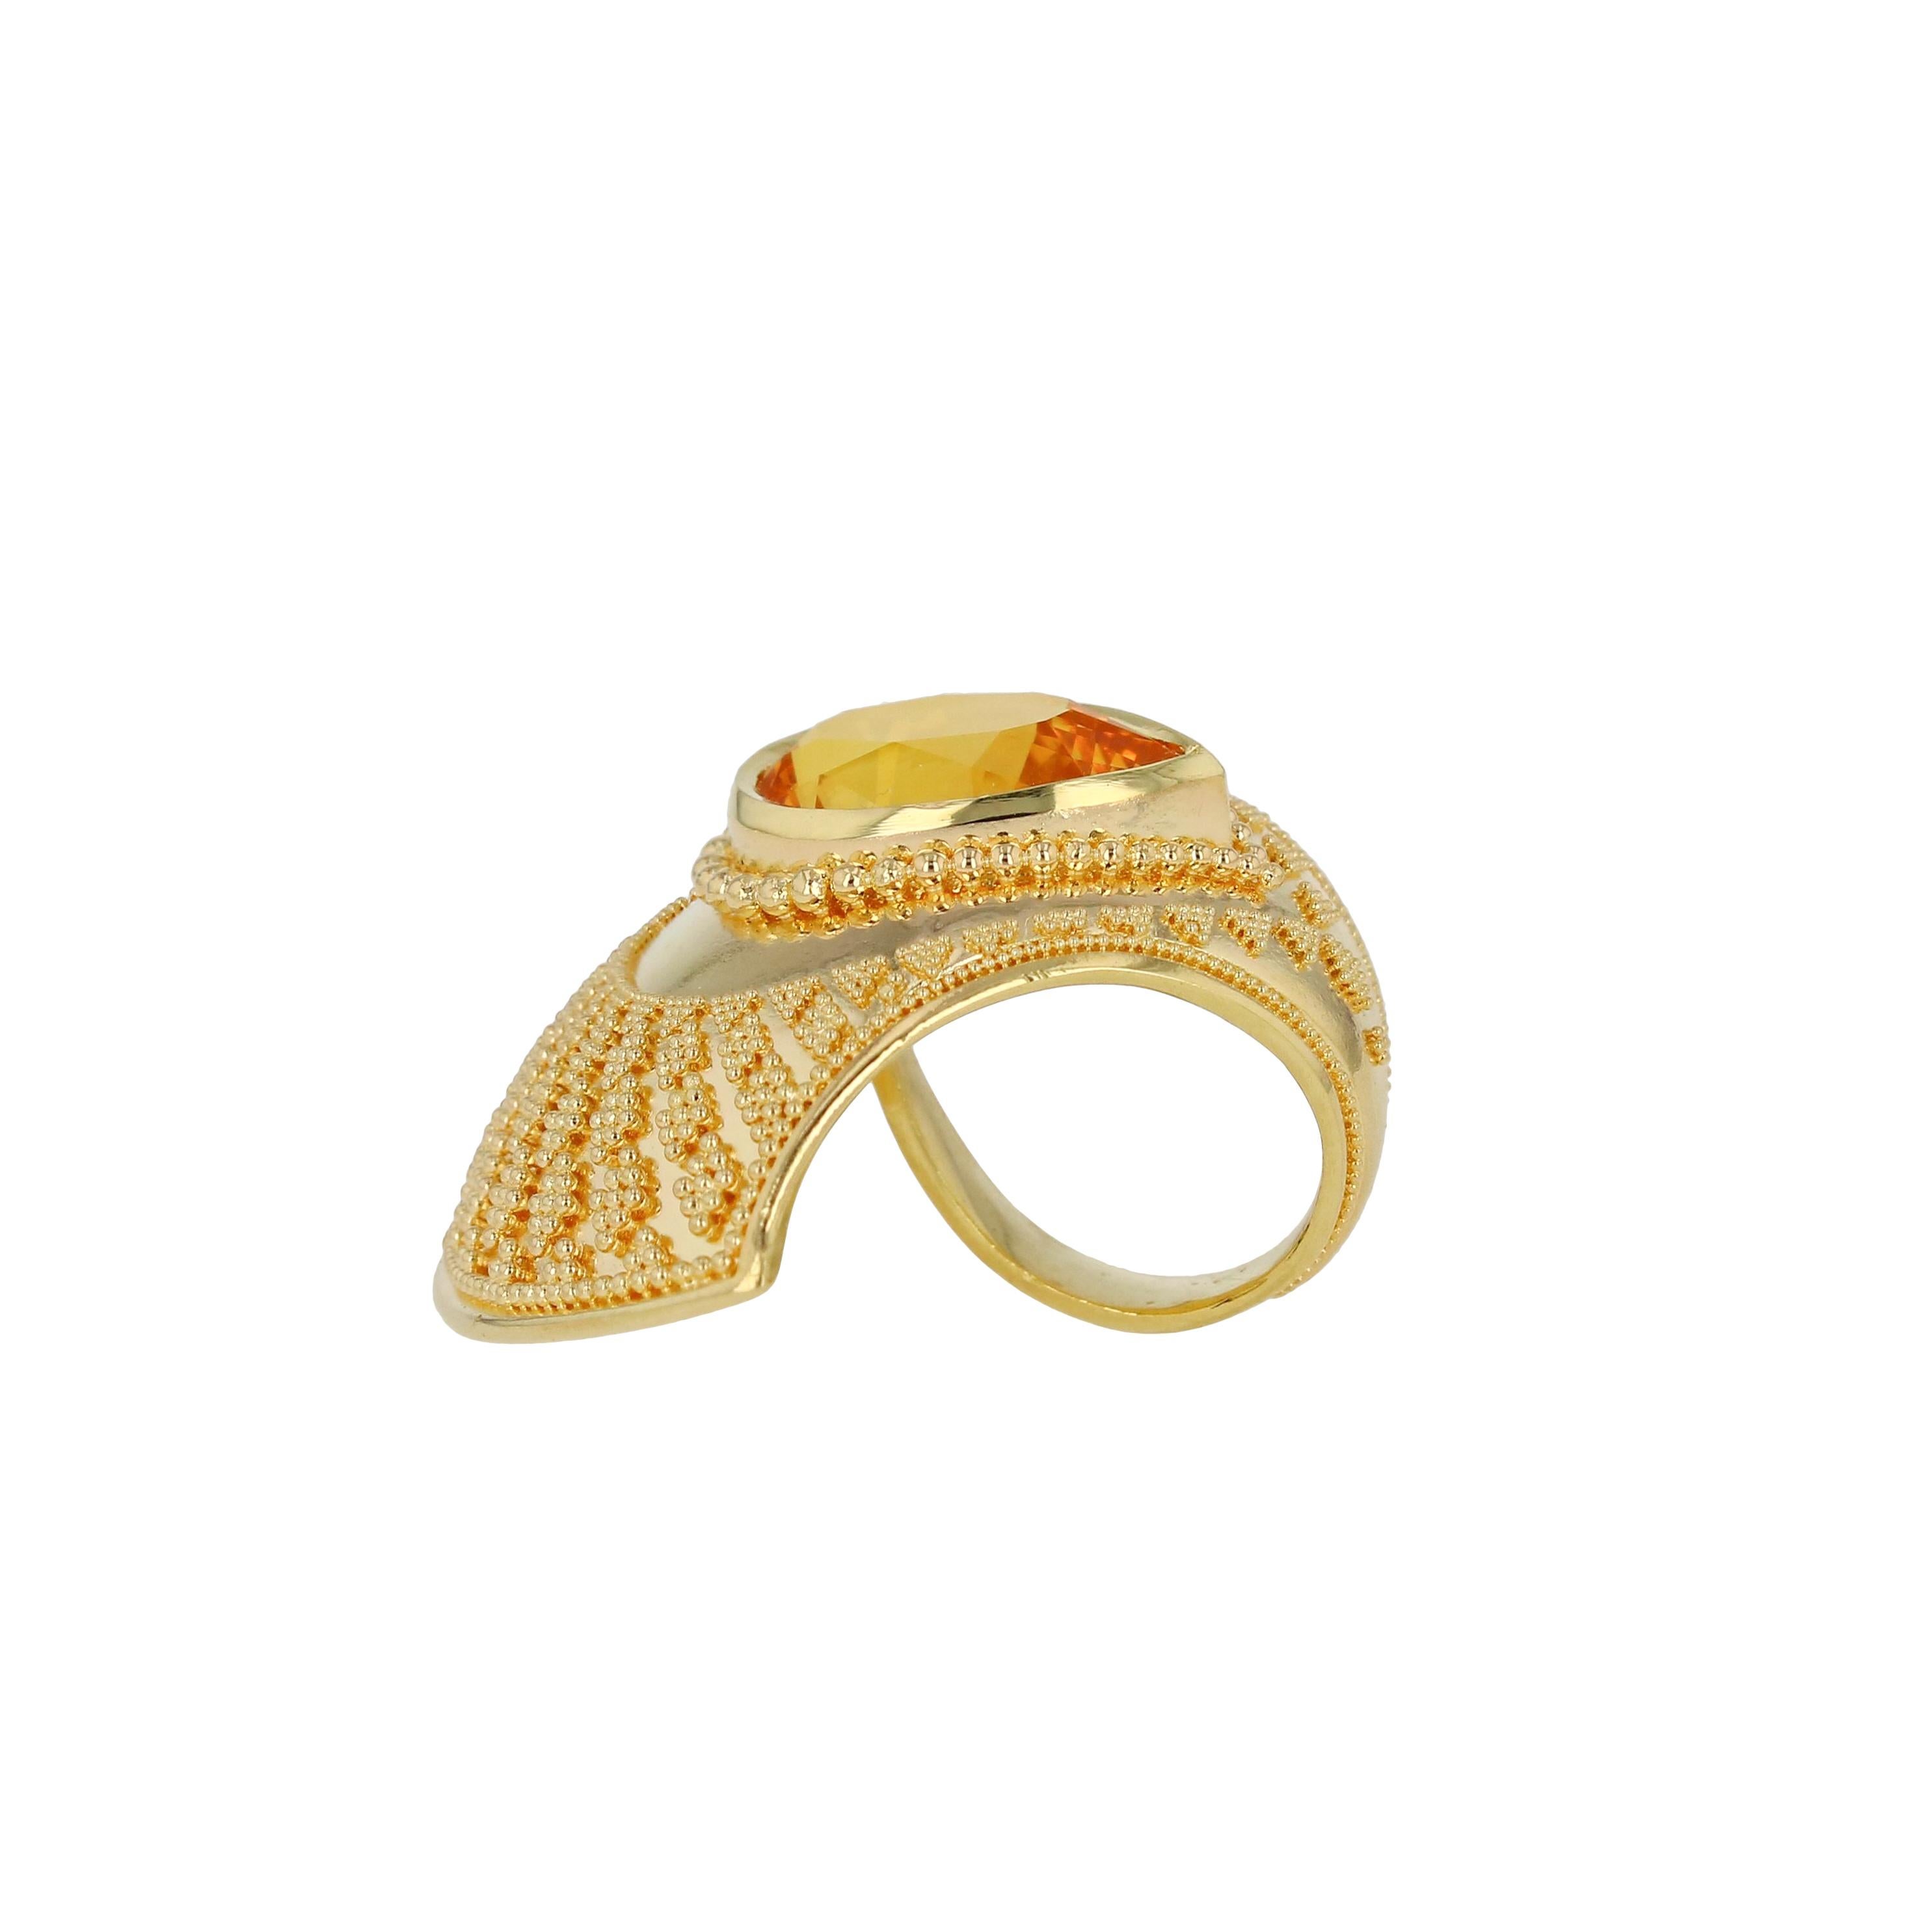 Pear Cut Kent Raible 18 Karat Gold Golden Sapphire Shell Pendant with fine Granulation For Sale